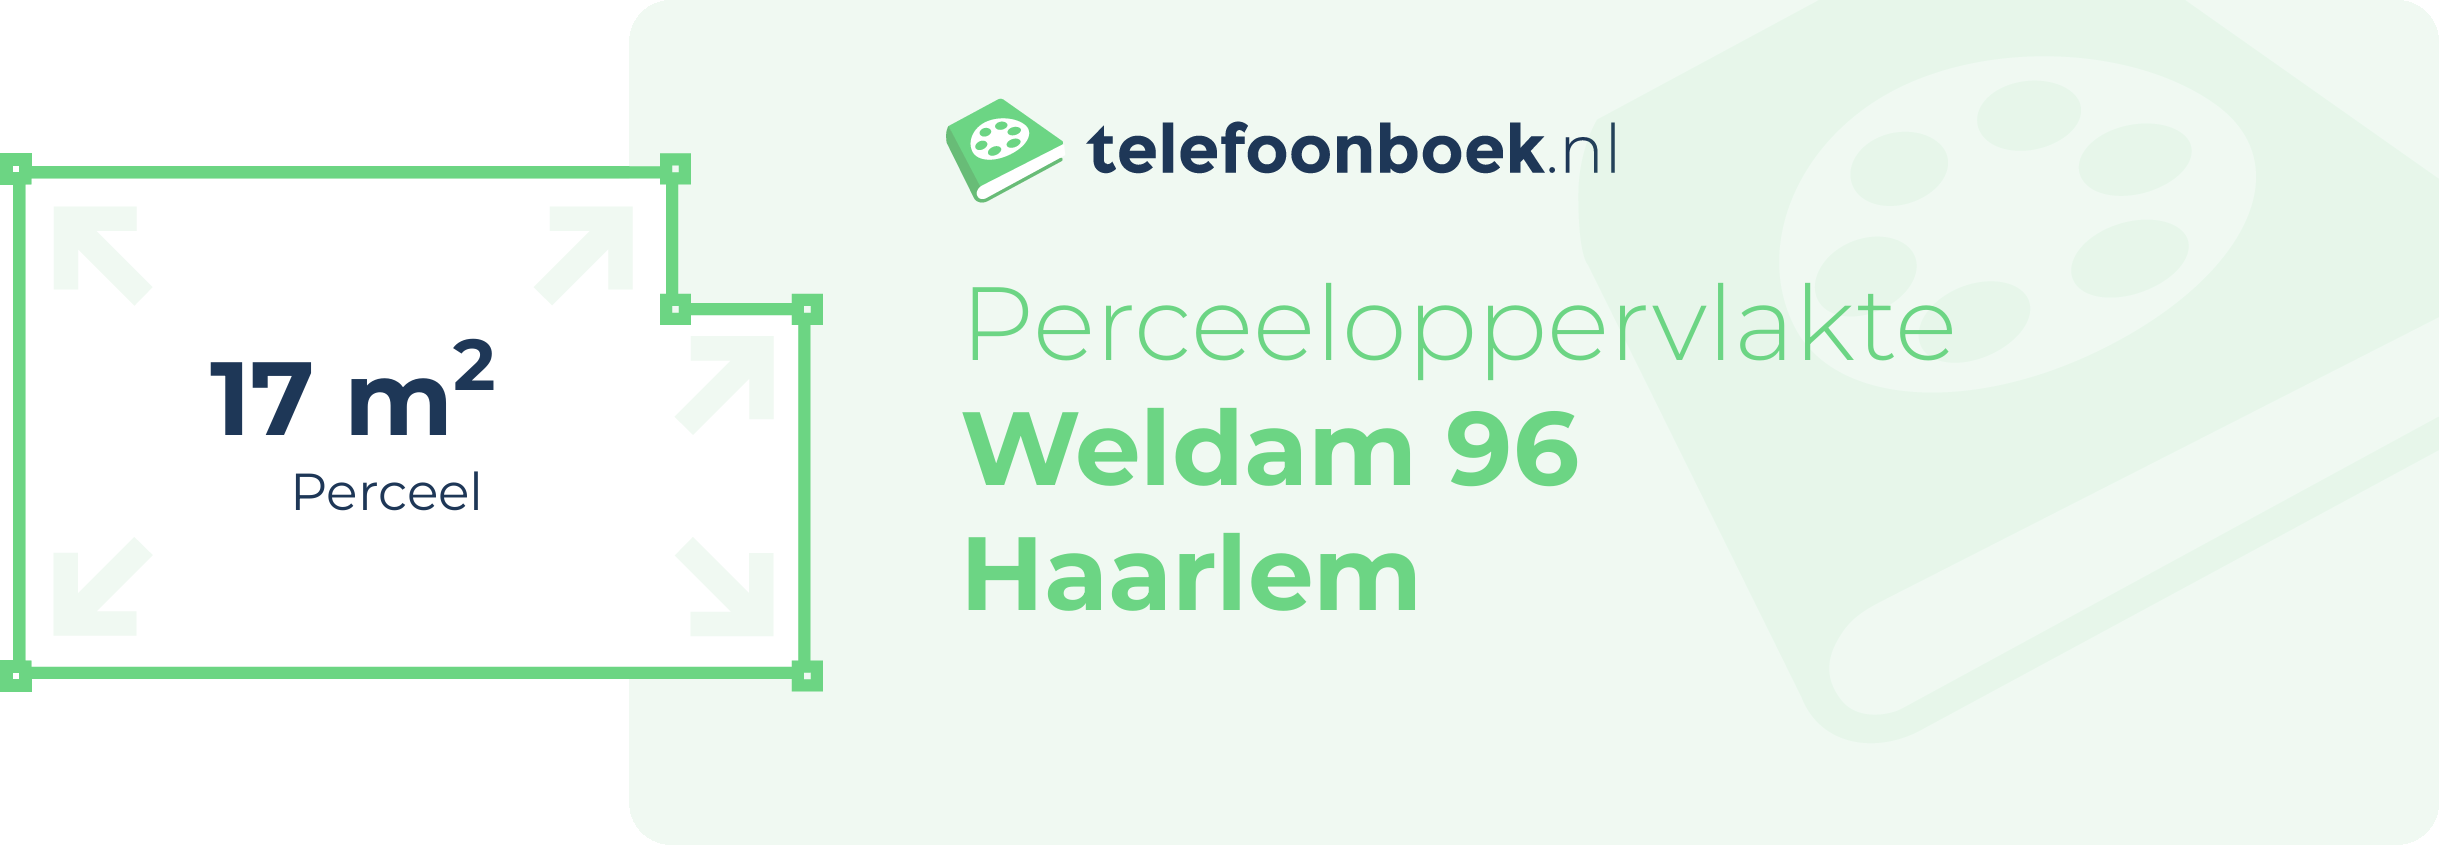 Perceeloppervlakte Weldam 96 Haarlem